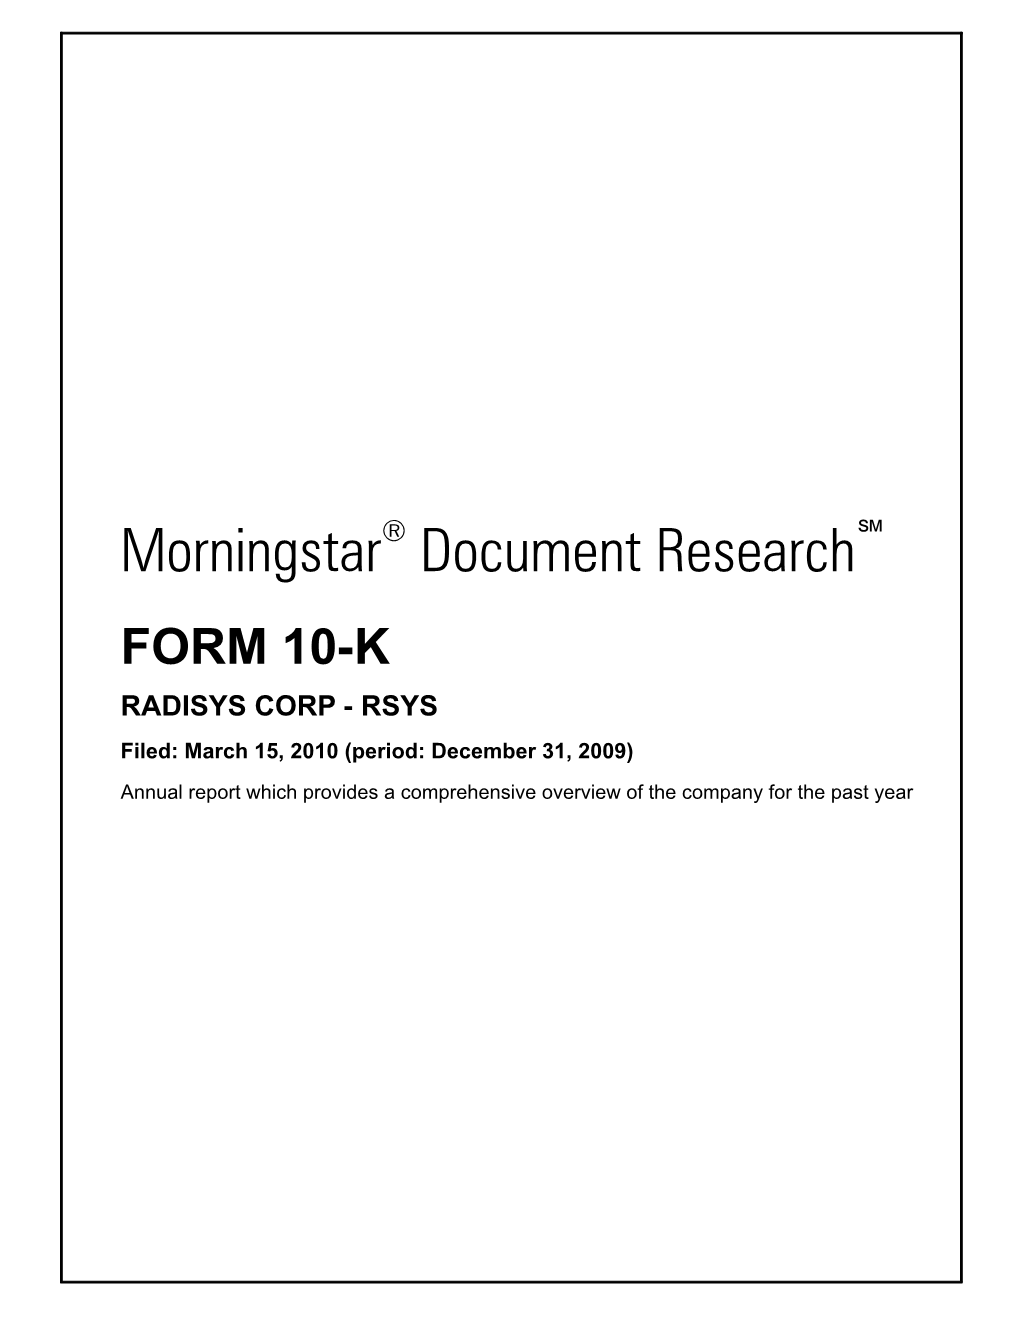 Morningstar Document Research FORM 10-K